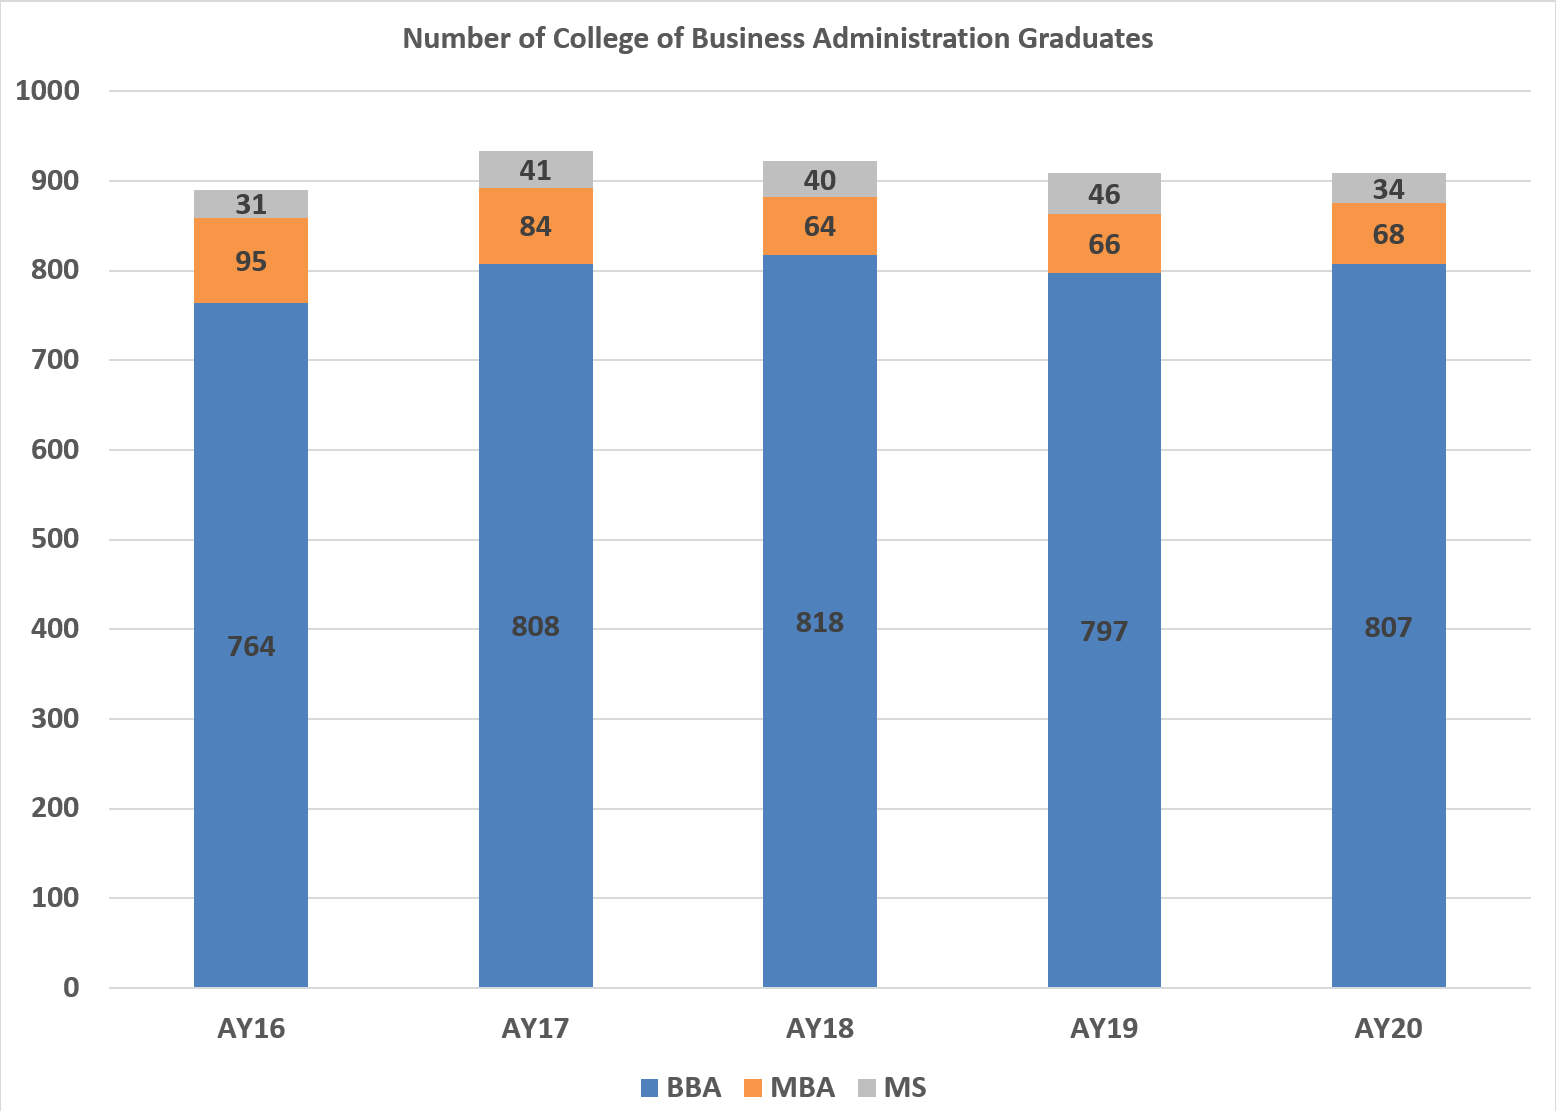 COBA Number of Graduates AY20